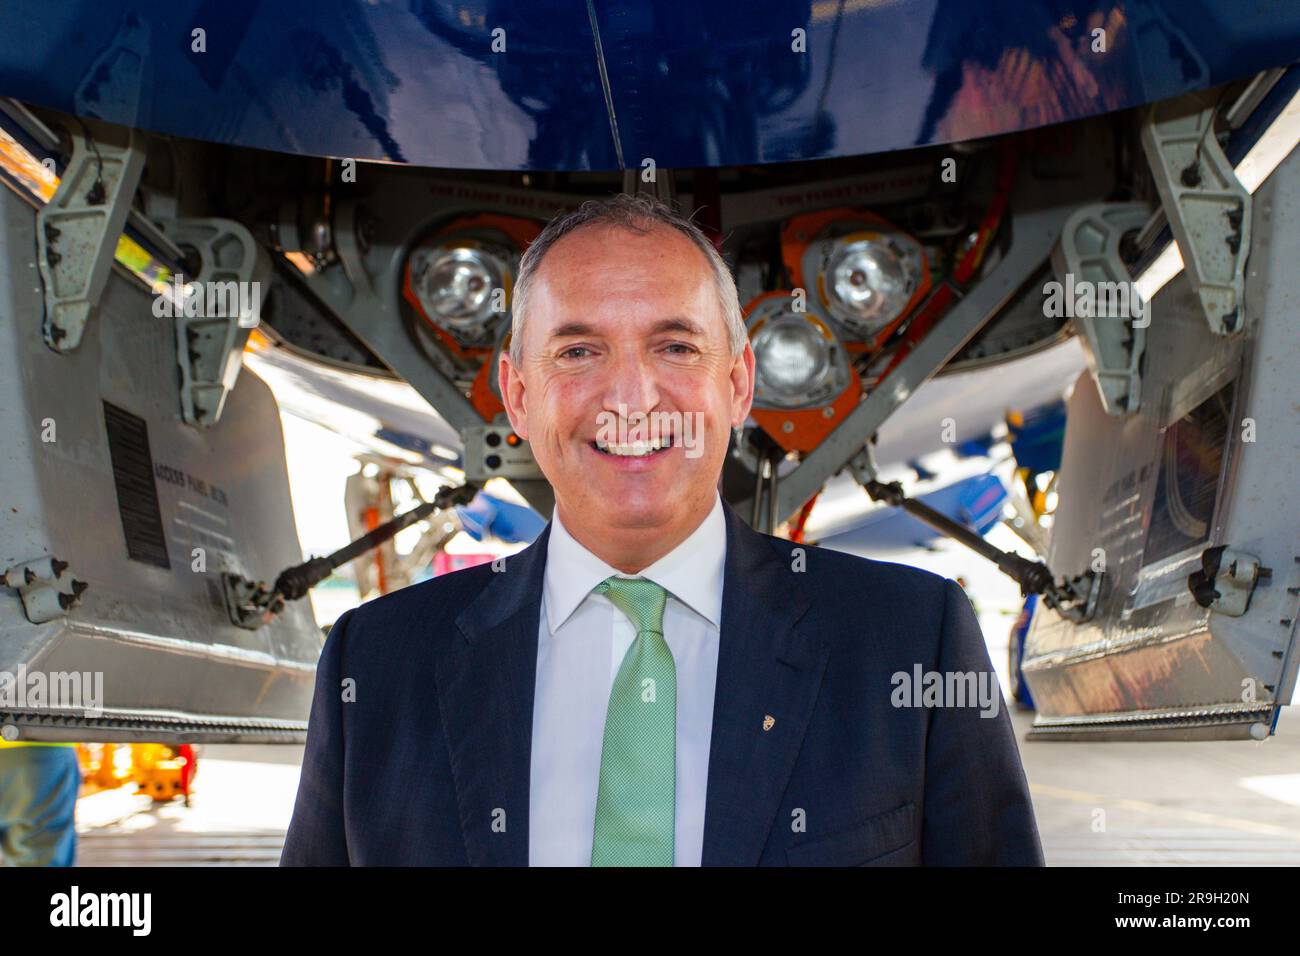 Air New Zealand's chief pilot Captain David Morgan poses for a ...